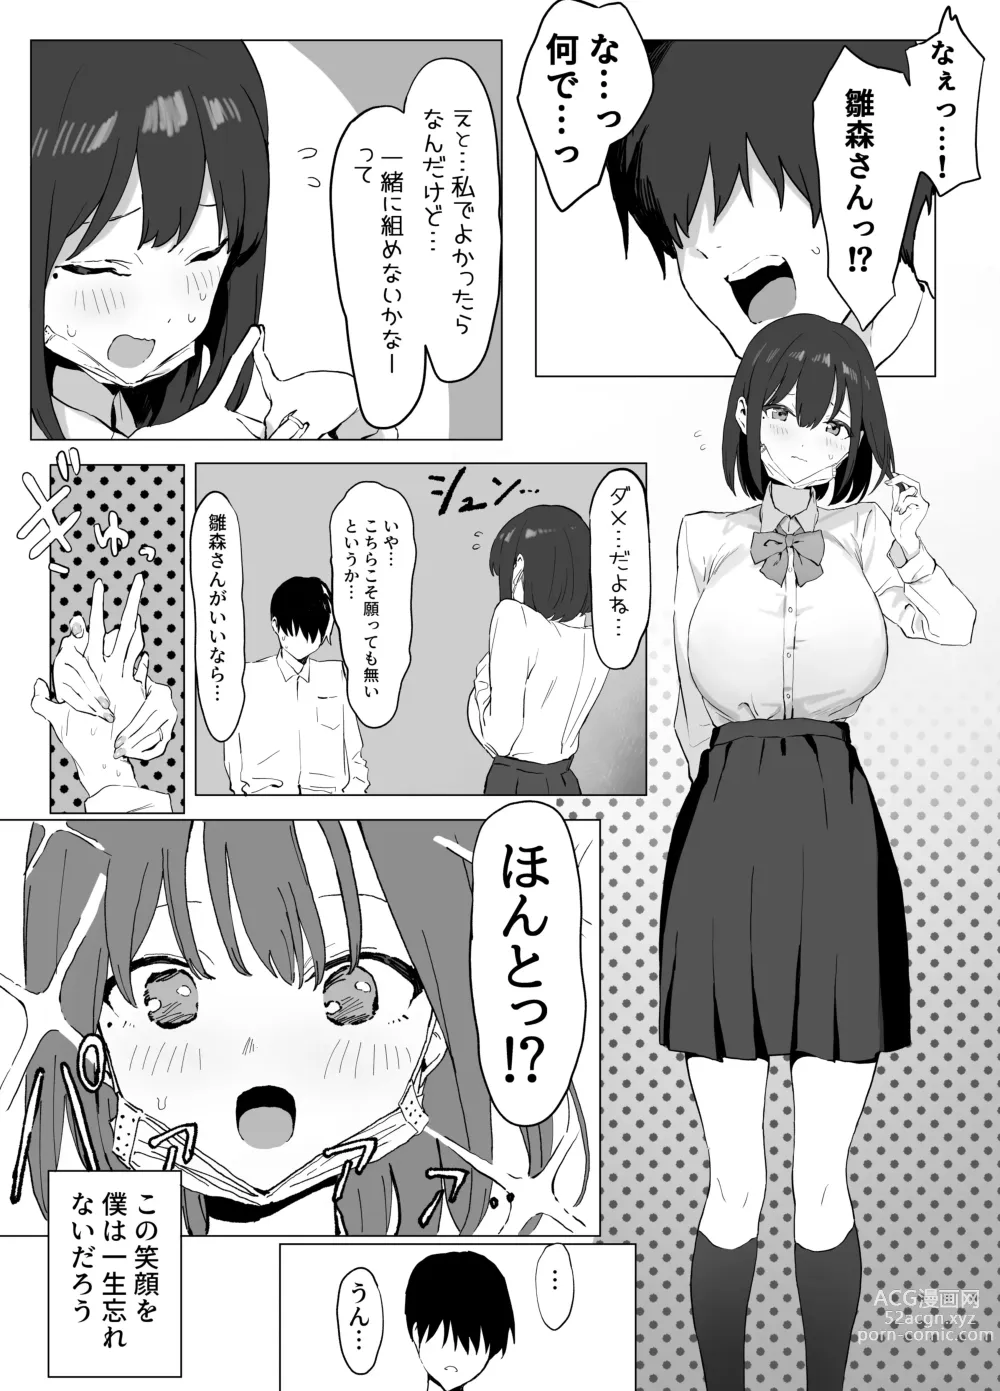 Page 7 of doujinshi Seikoui Jisshuu!